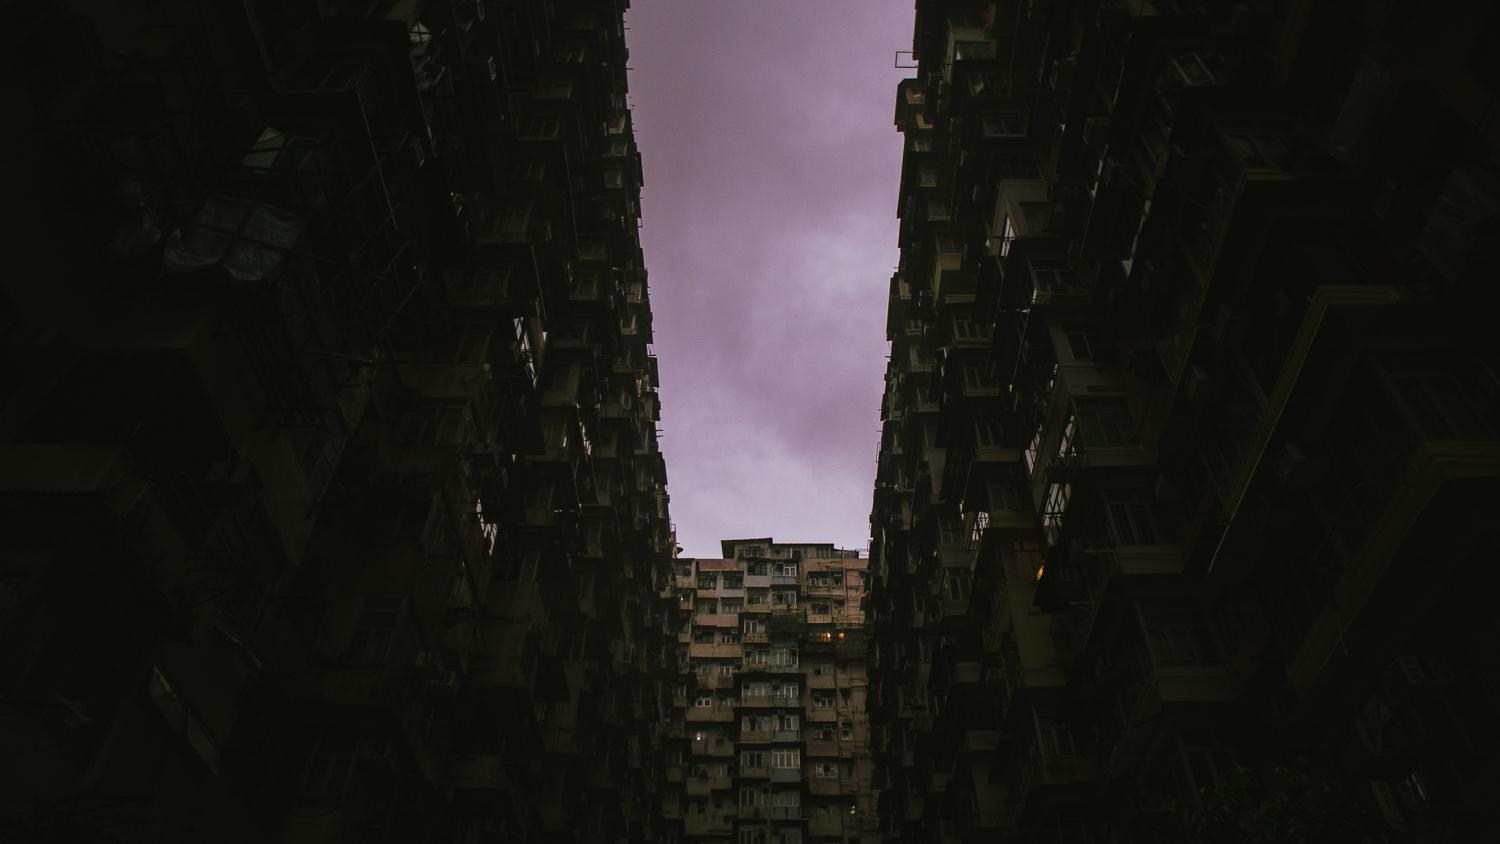 Home - Single image - Megastructures of Hong Kong